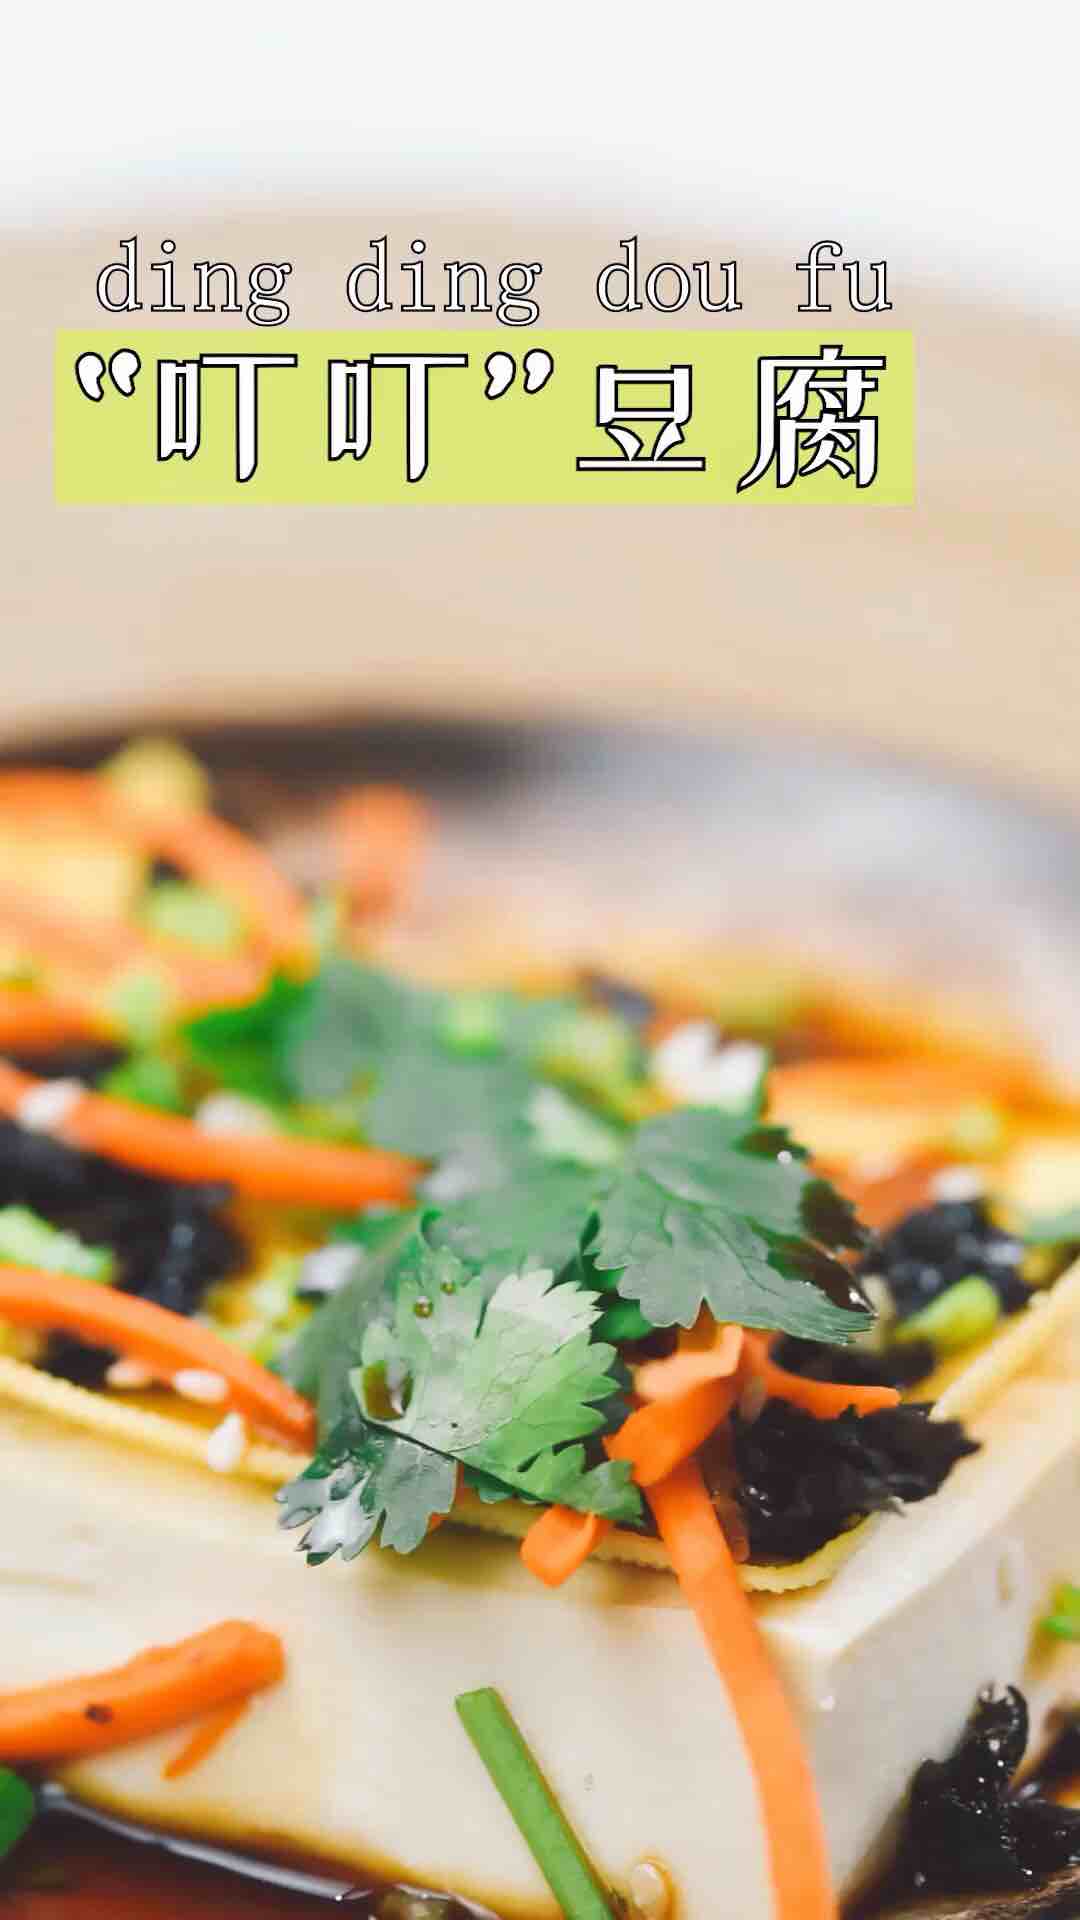 Simple and Low-calorie "dingding" Tofu recipe